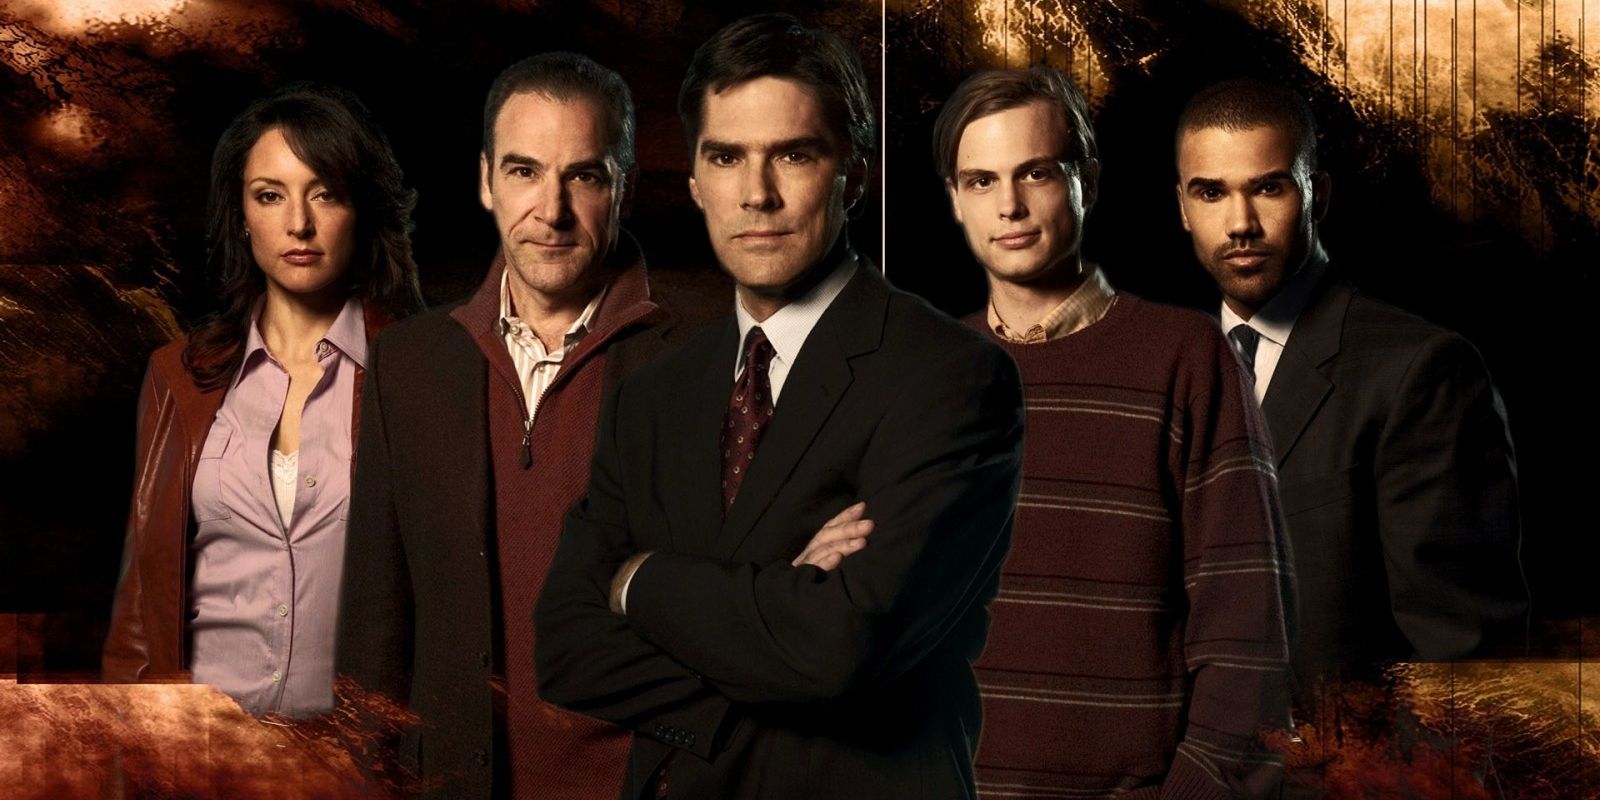 Season 1 line up of Criminal Minds characters Elle, Gideon, Aaron, Spencer, and Derek stand together